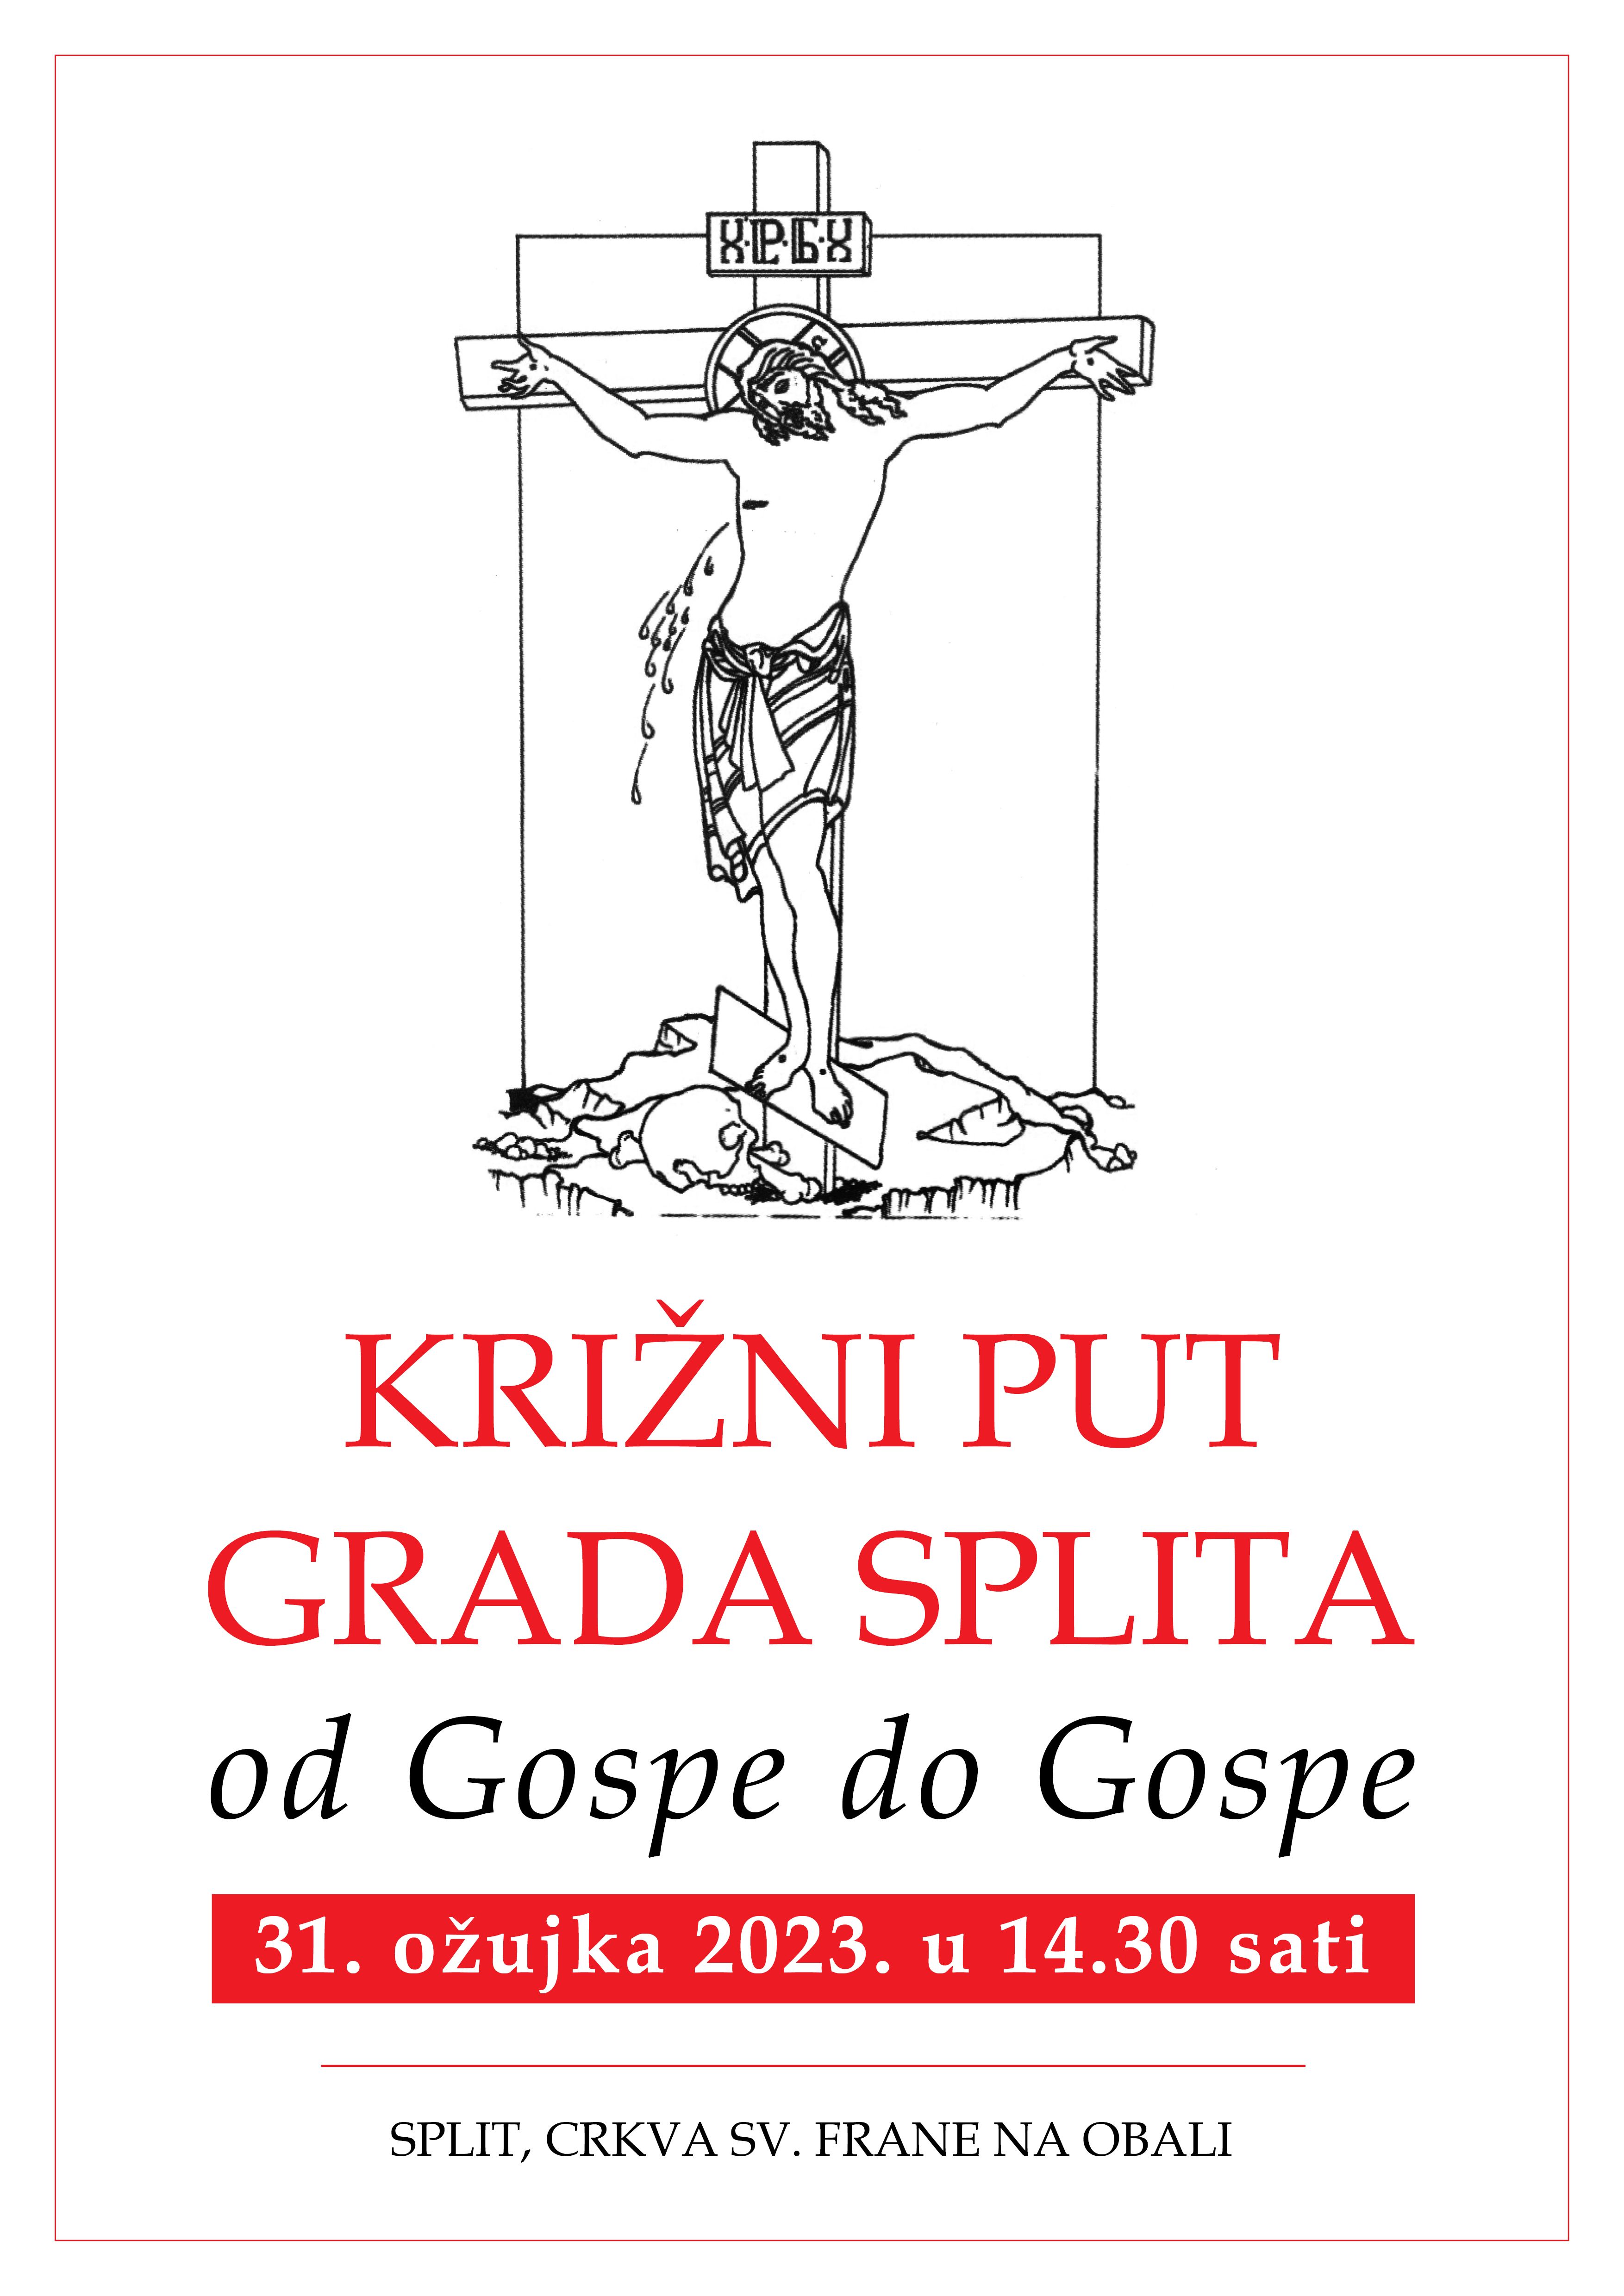 Križni put grada Splita plakat 2023